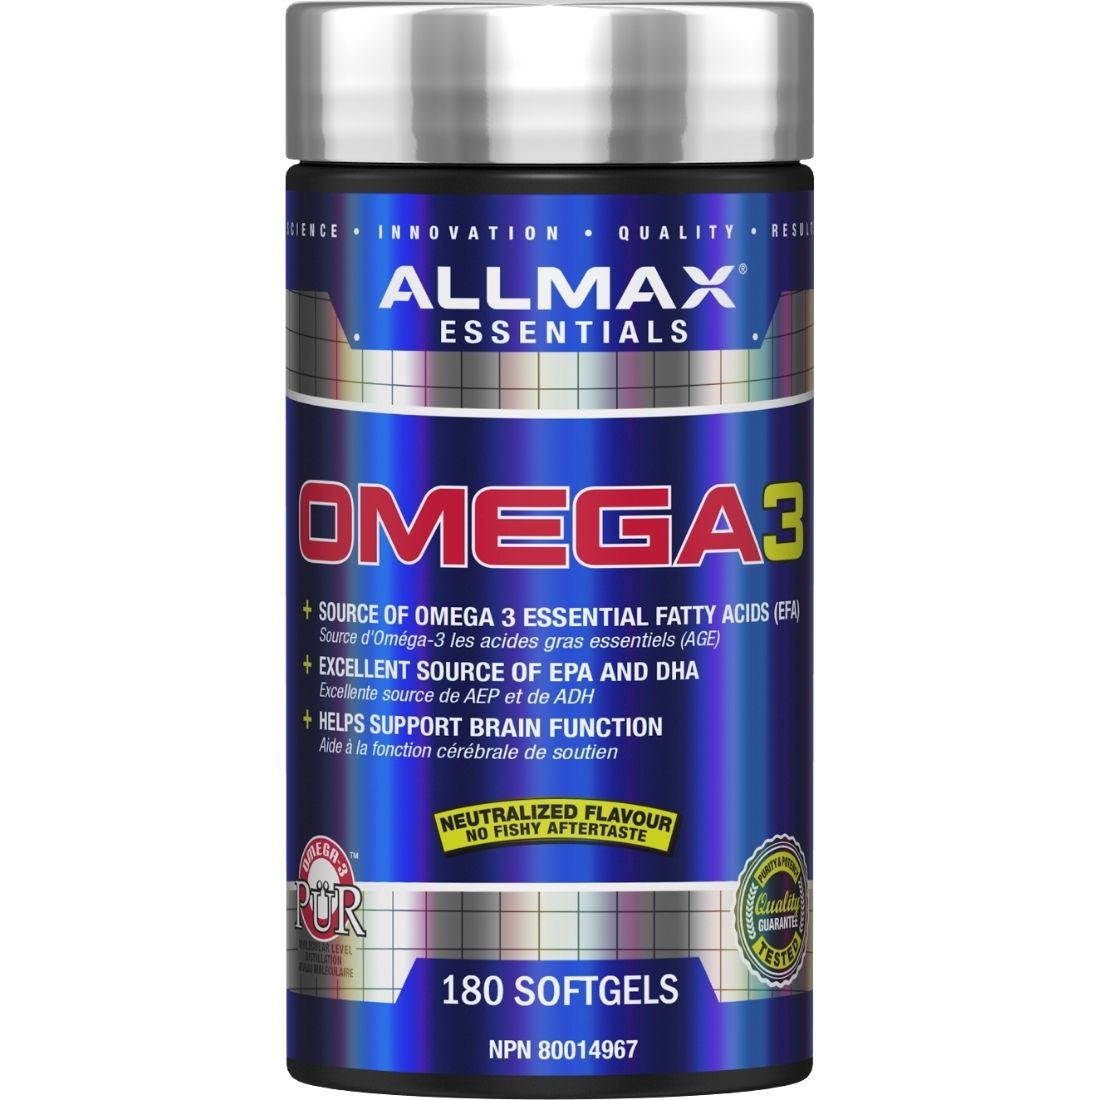 Allmax Omega 3, 180 Softgels